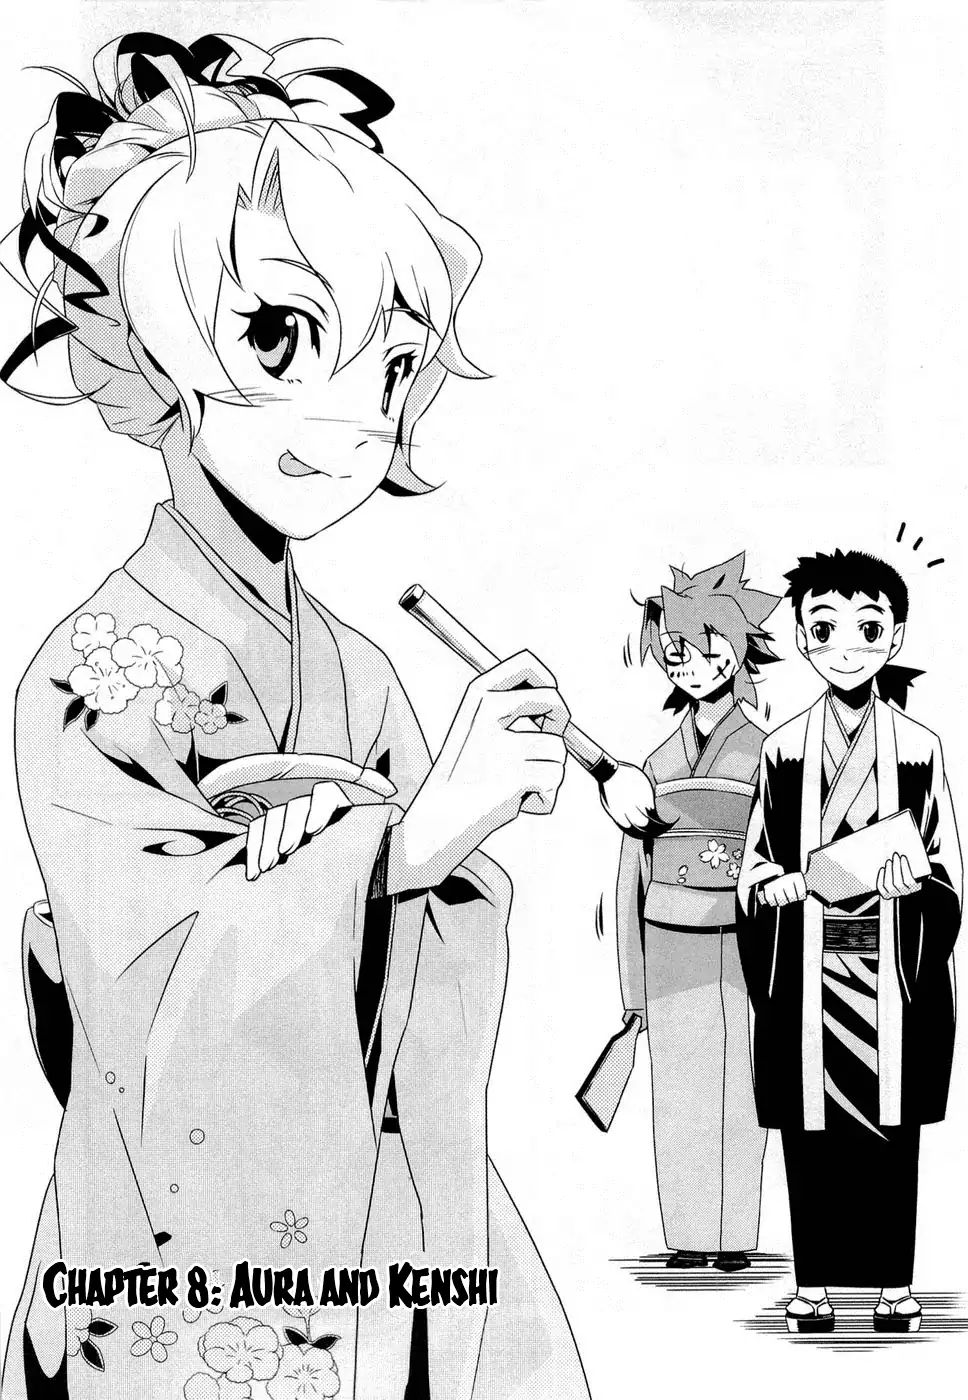 Isekai No Seikishi Monogatari Vol.2 Chapter 8: Aura And Kenshi - Picture 2